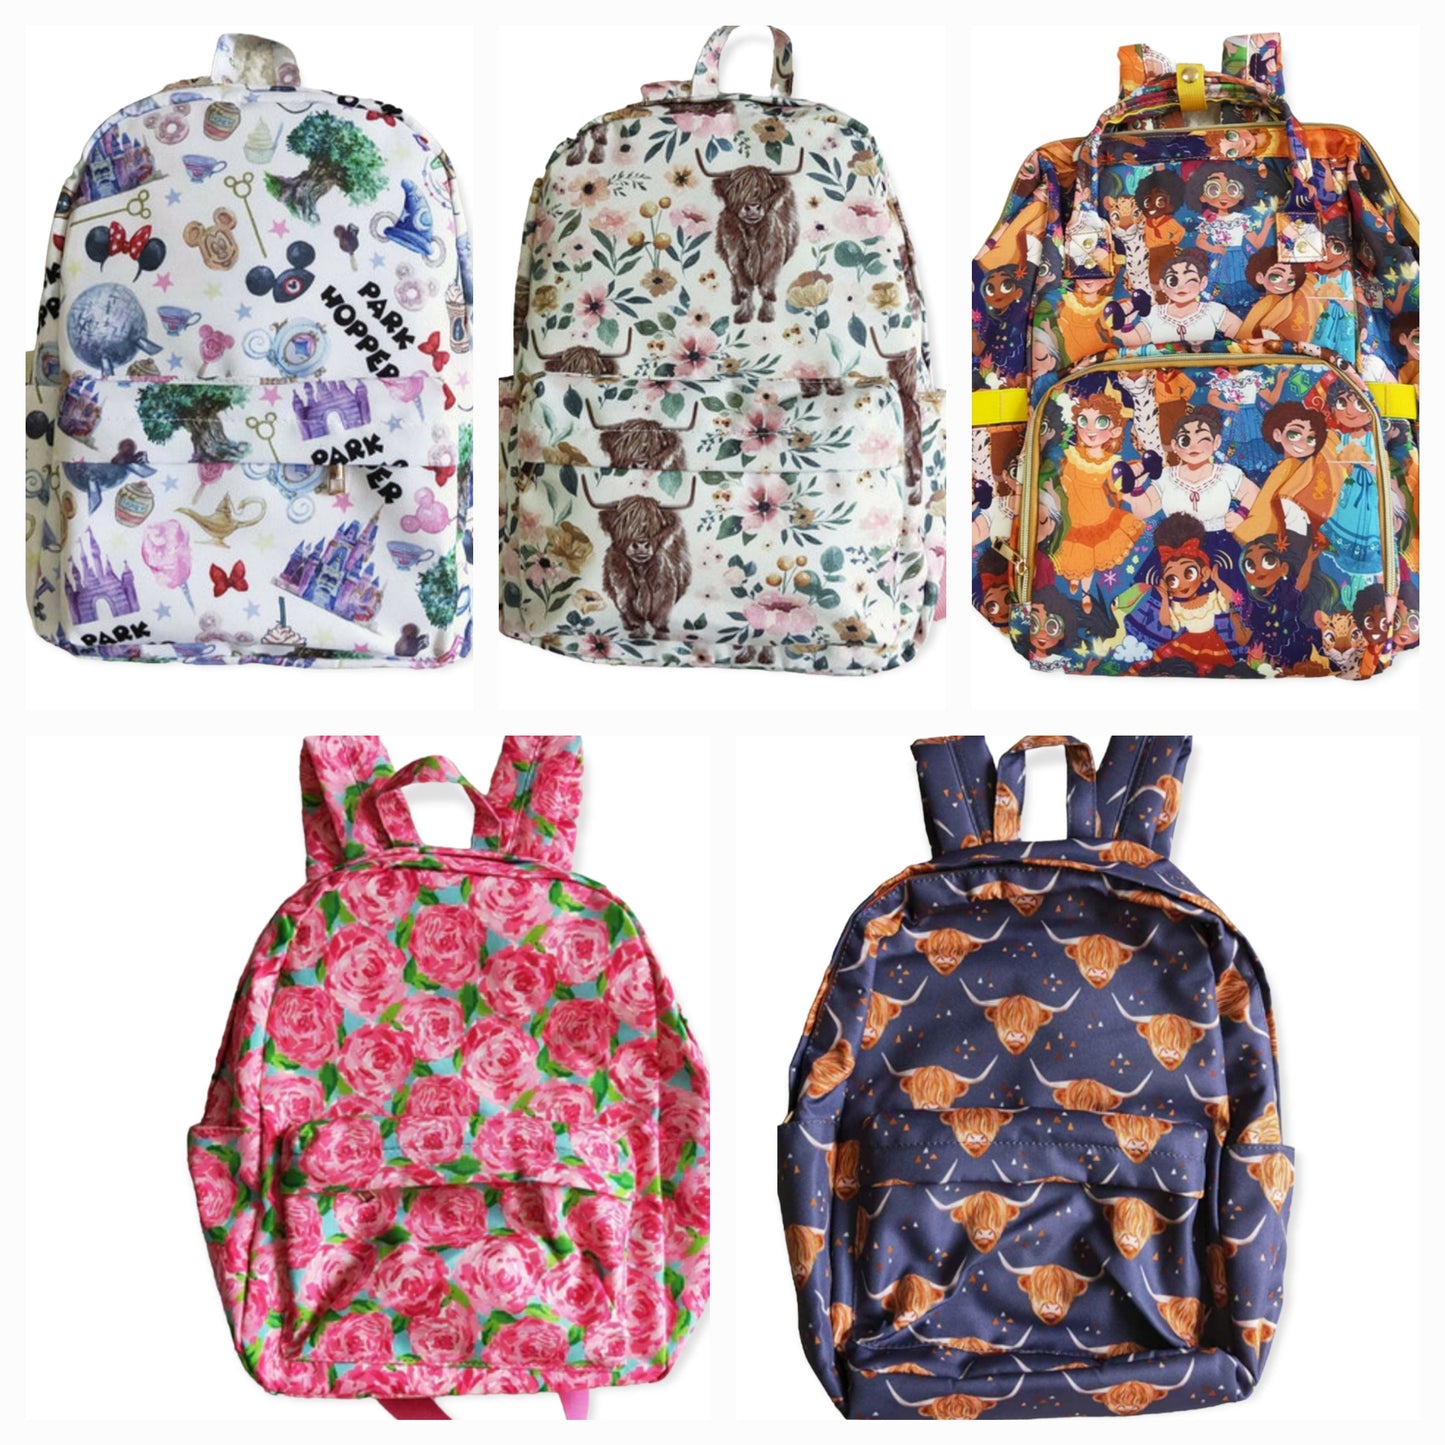 Backpacks many styles here